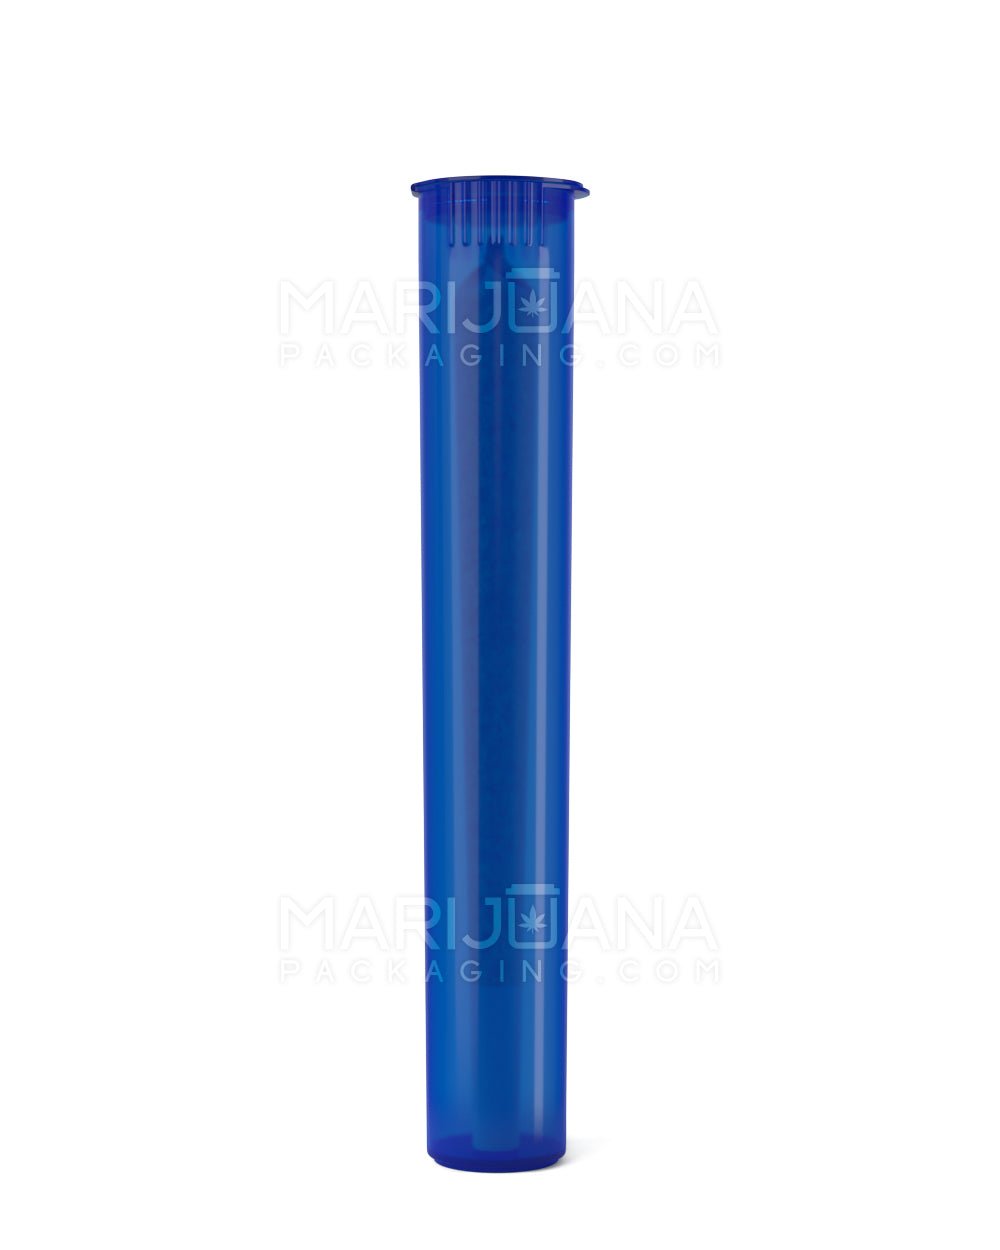 Child Resistant | King Size Pop Top Translucent Plastic Pre-Roll Tubes | 116mm - Blue - 1000 Count - 3